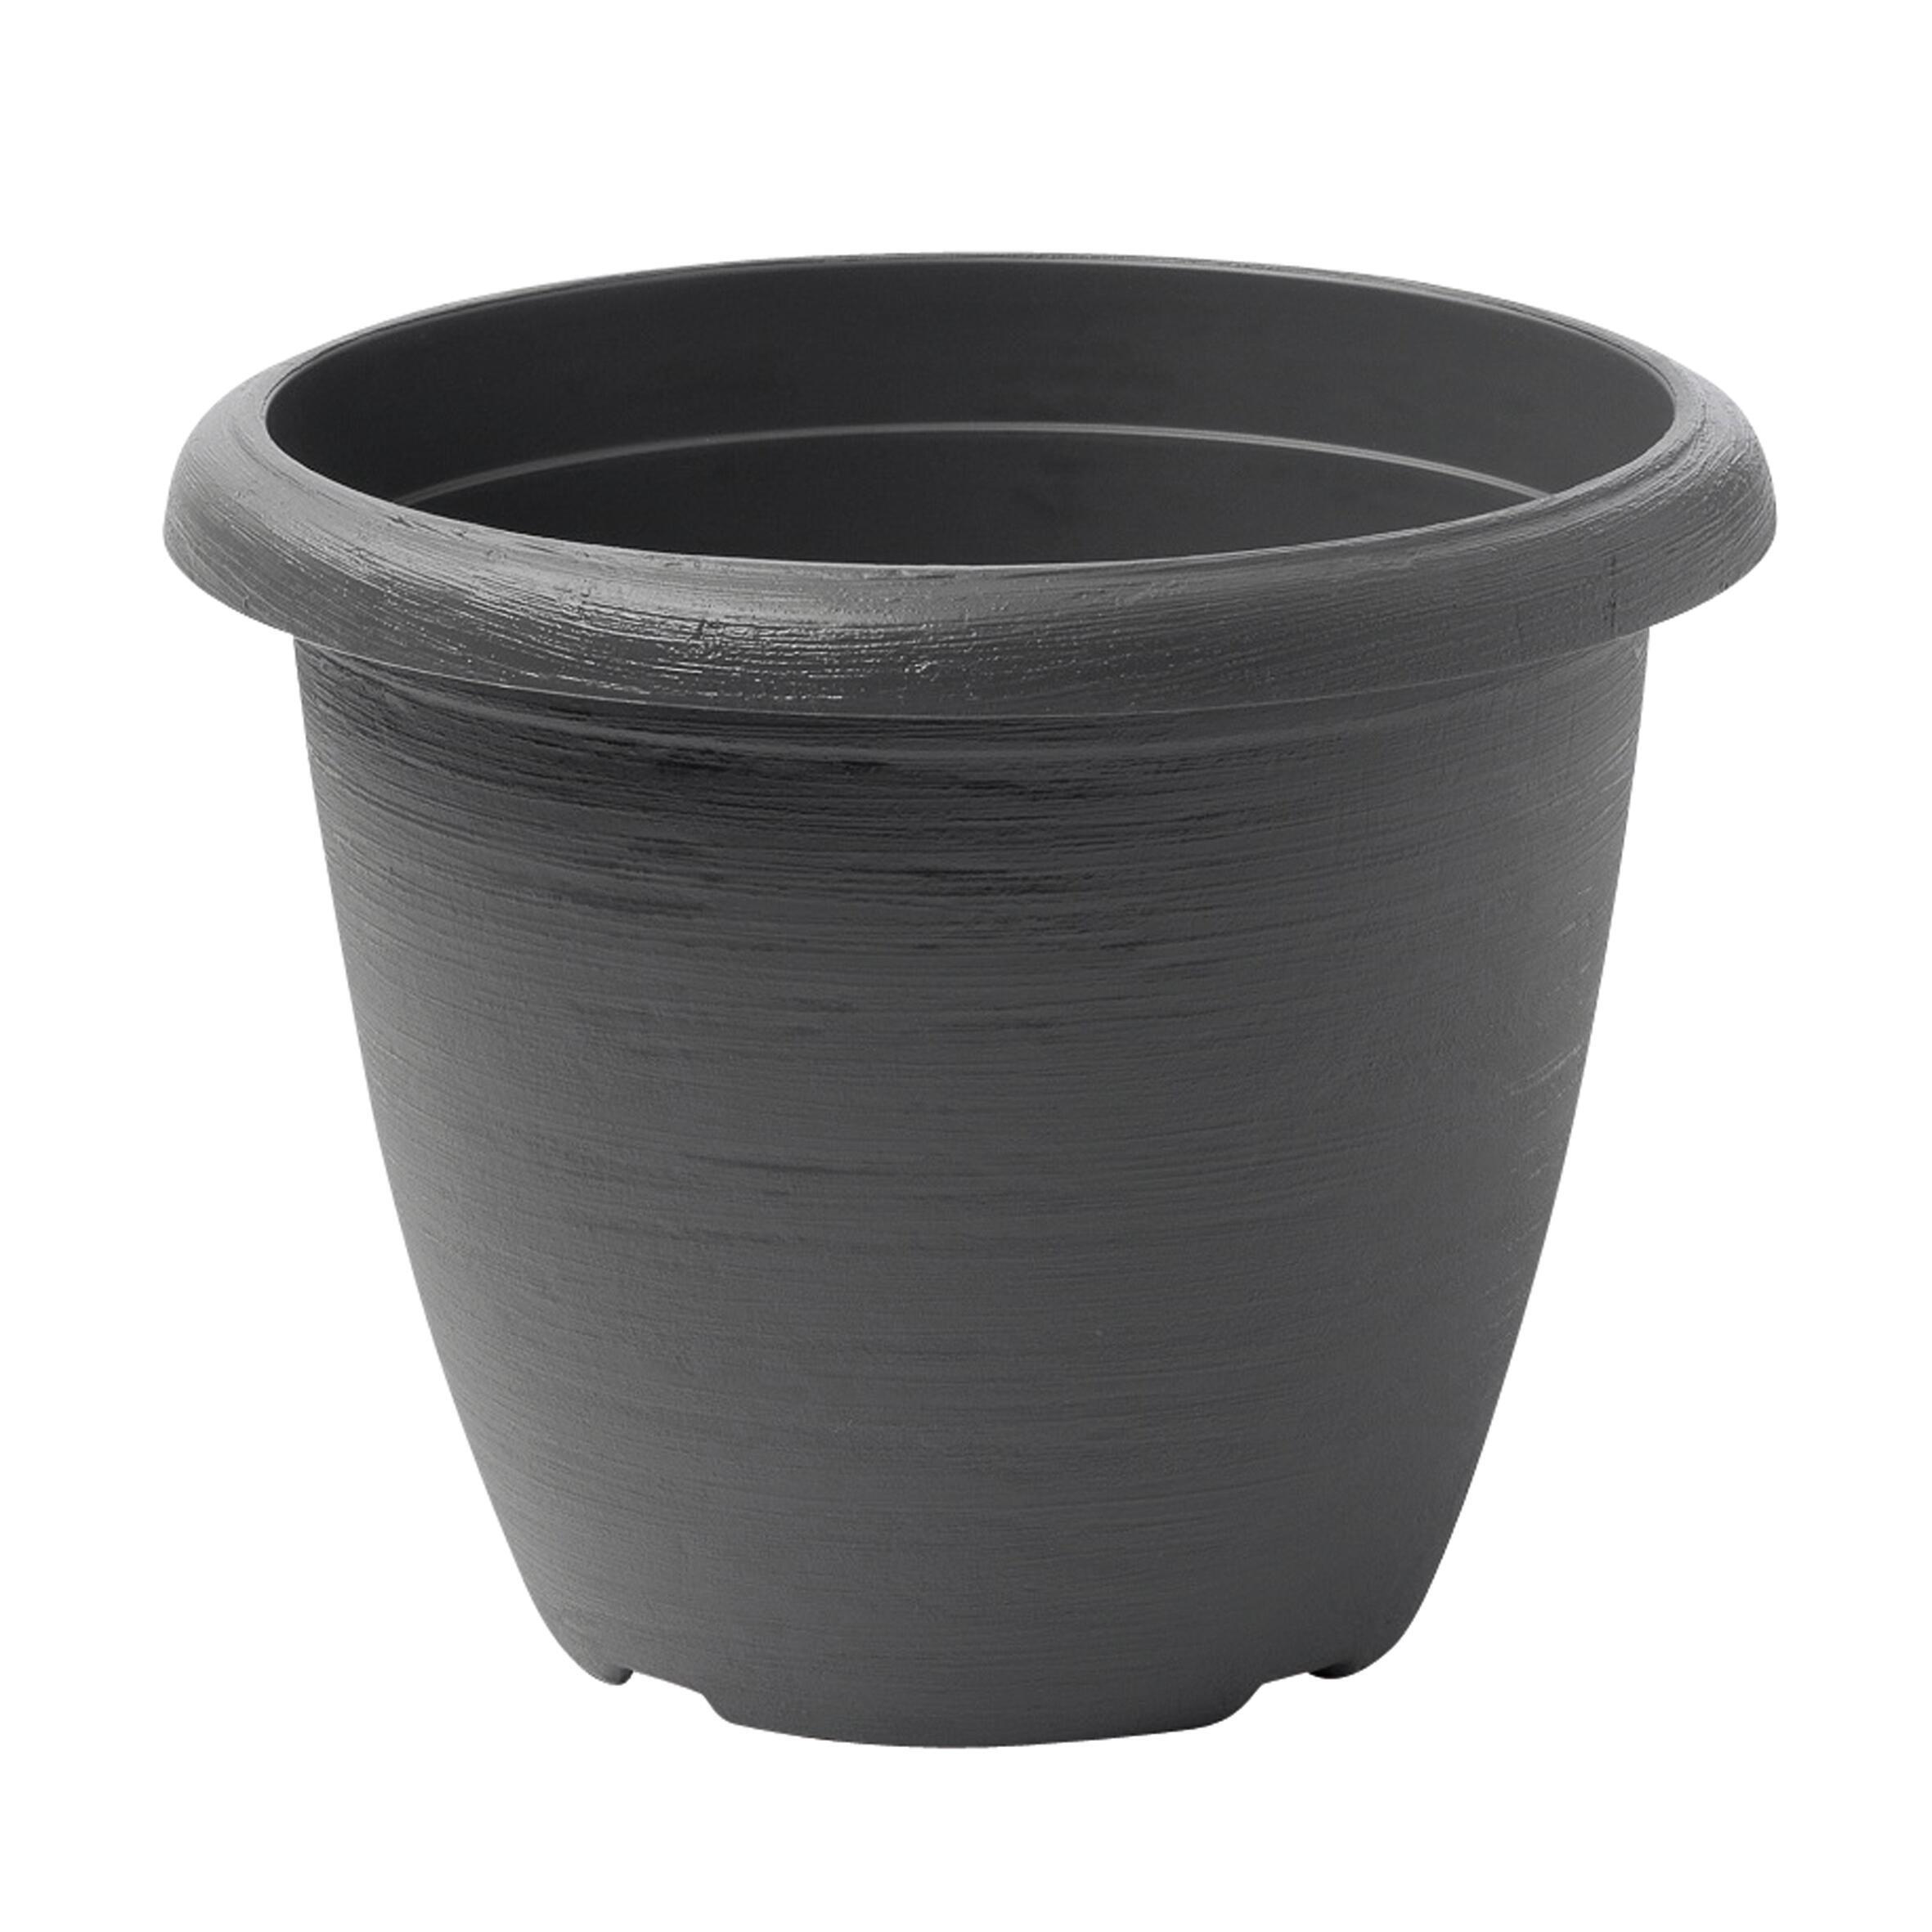 Vaso Campana Terrae in polipropilene colore grigio H 37 cm, Ø 50 cm - 1